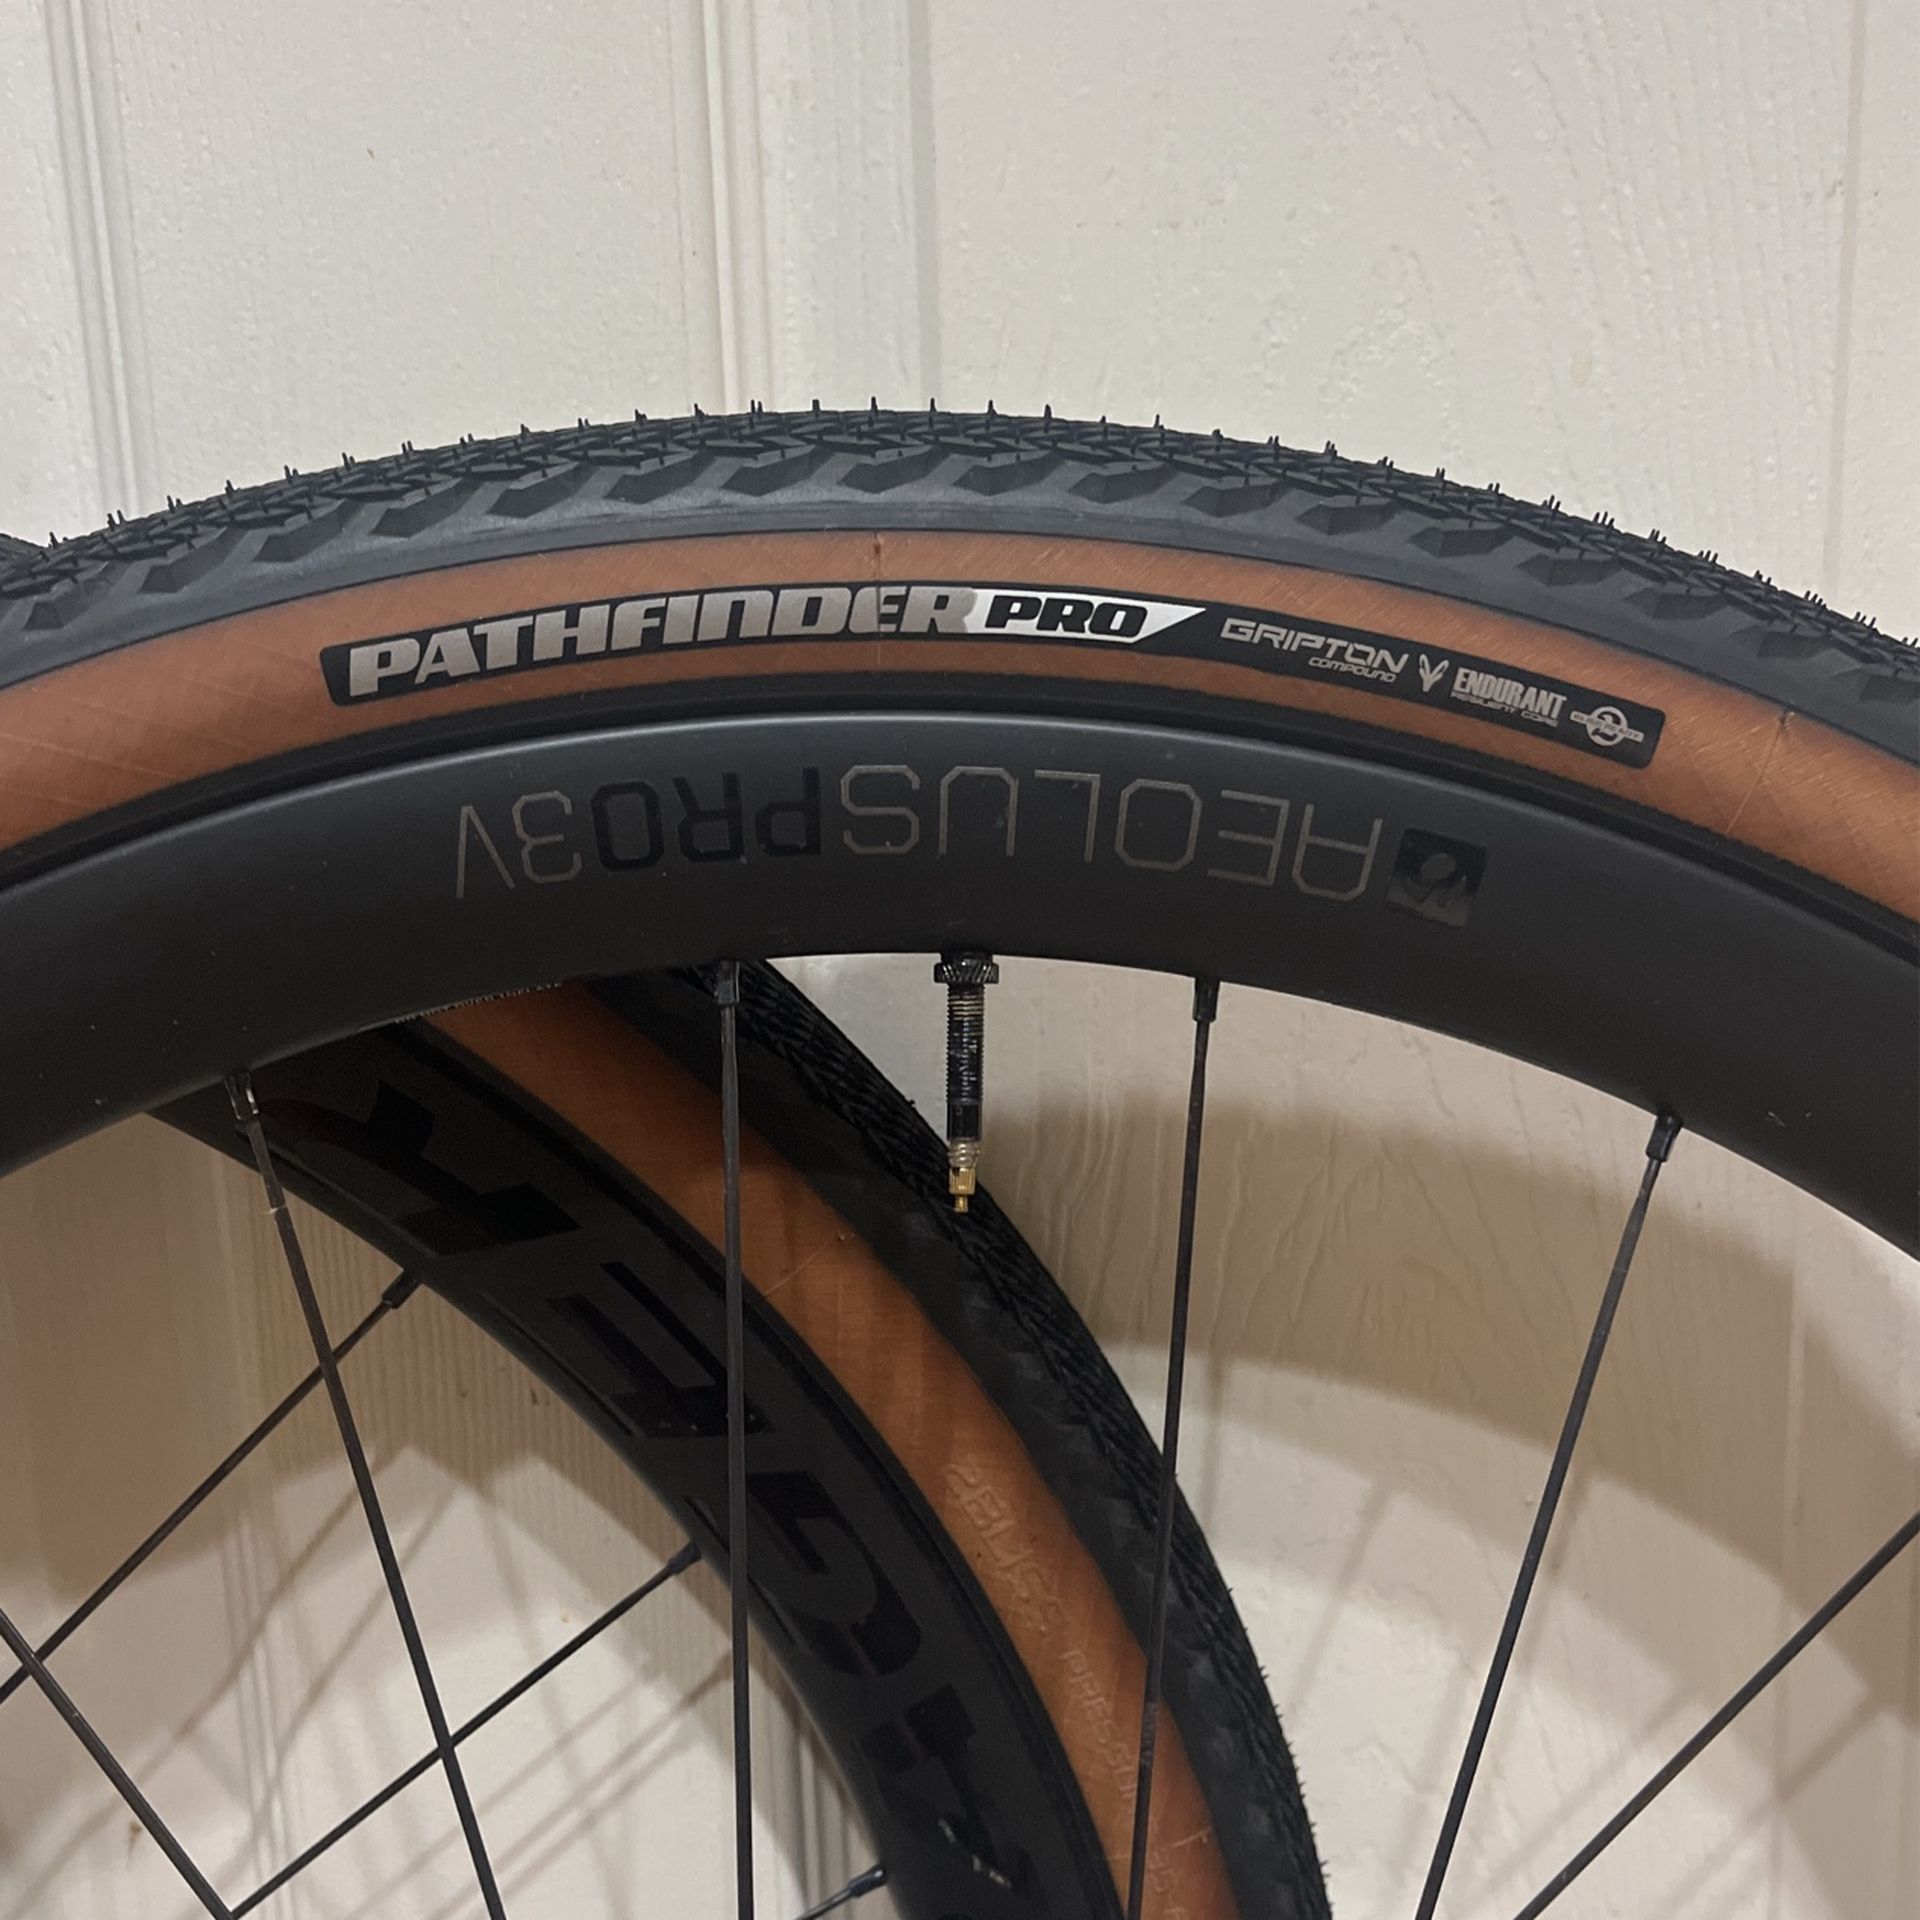 Speliazed Pathfinder Pro Gravel Tires